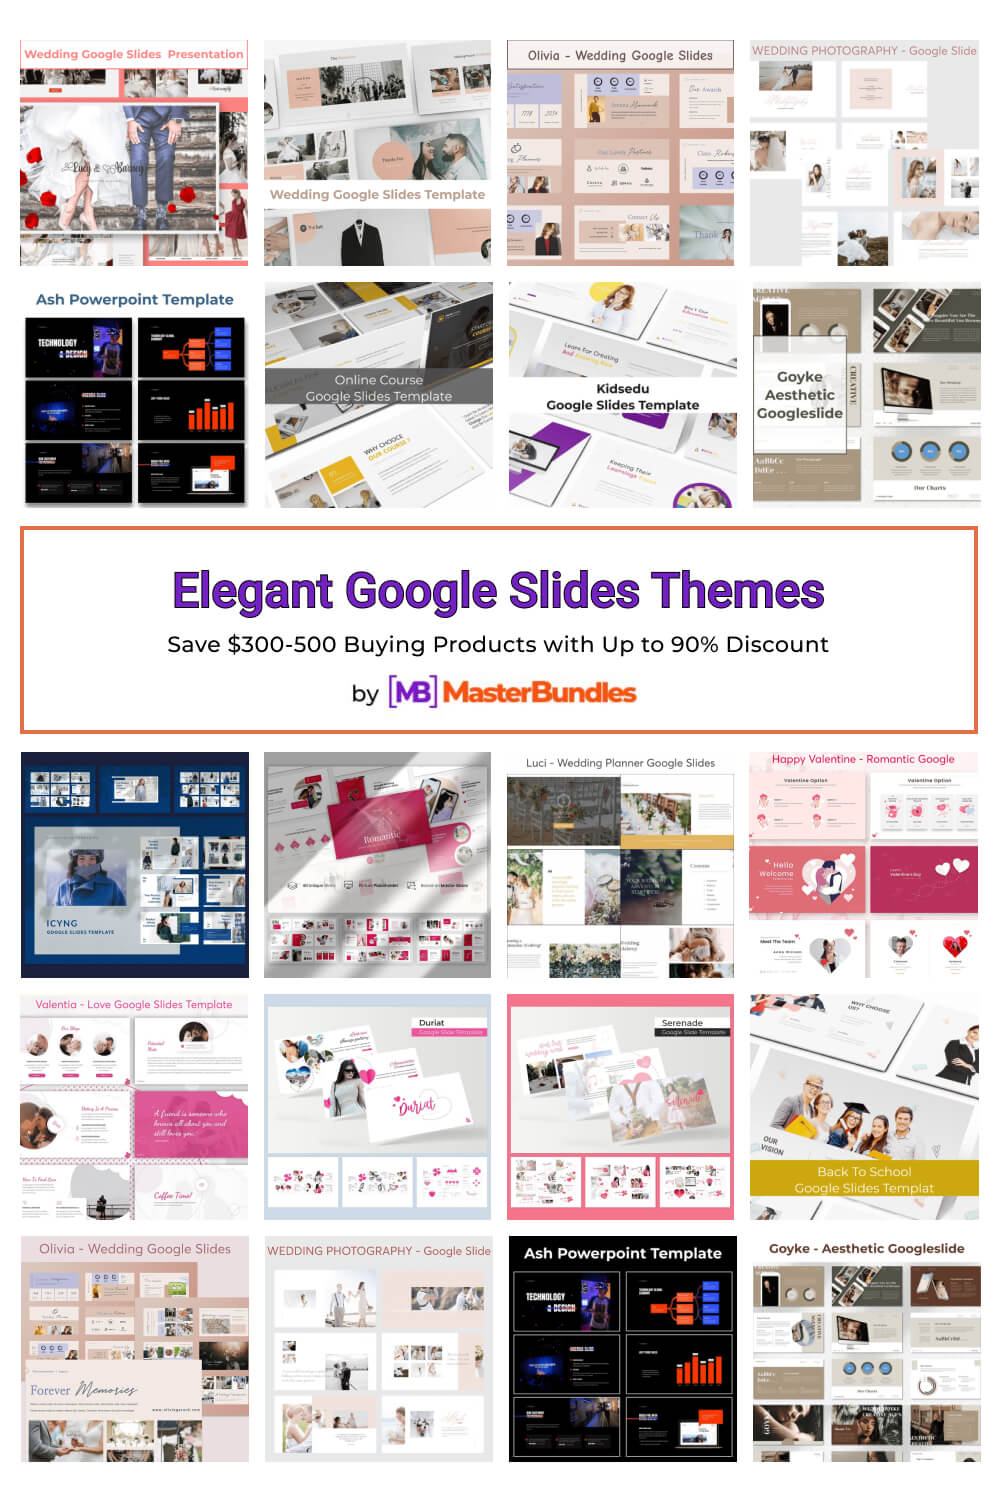 elegant google slides themes pinterest image.